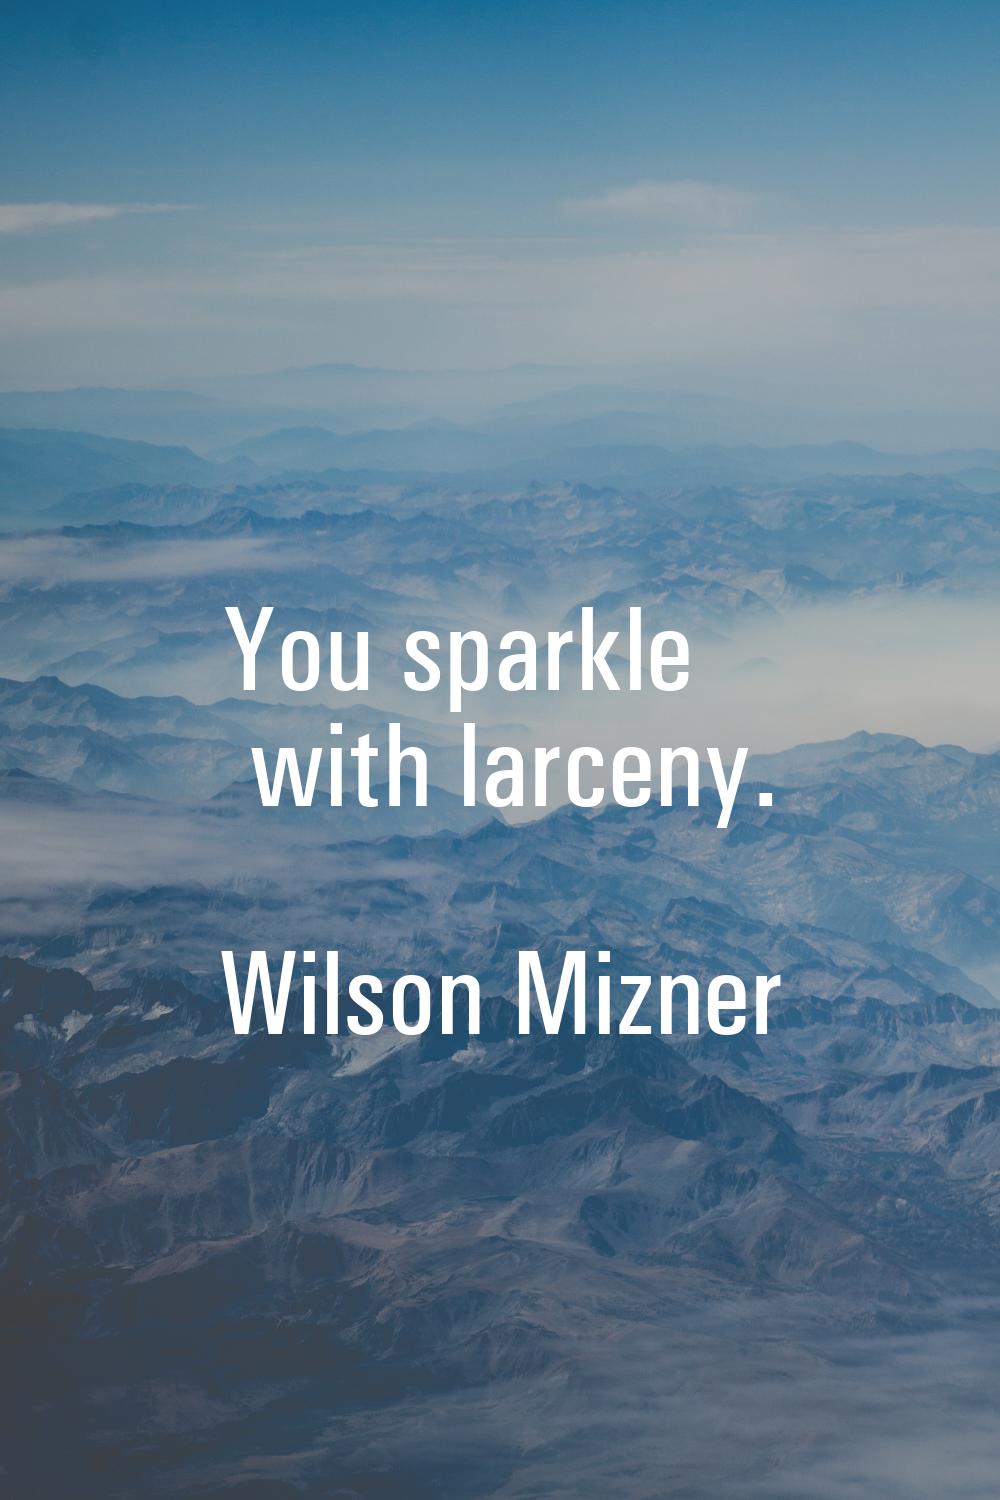 You sparkle with larceny.